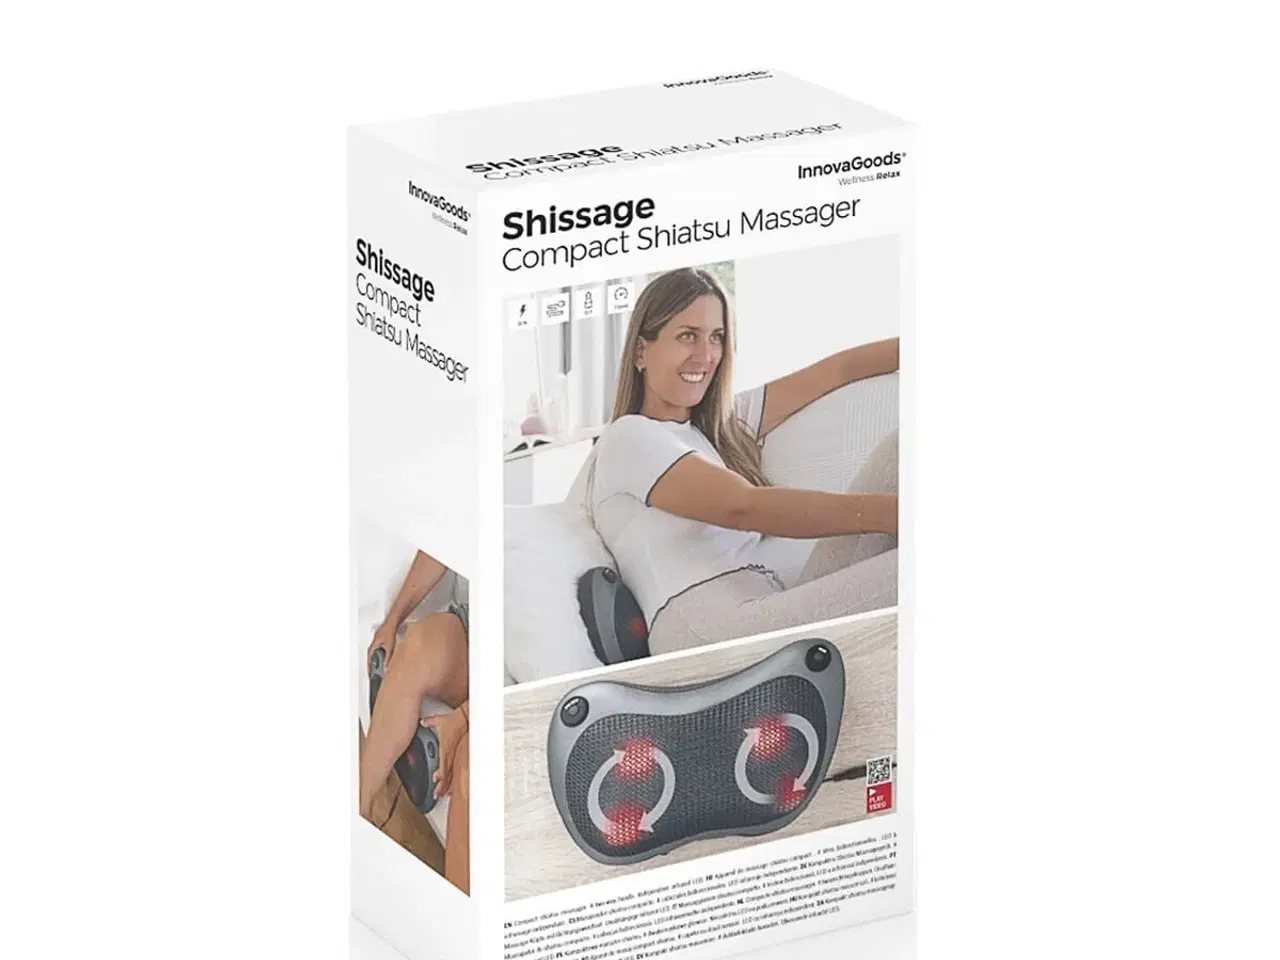 Billede 3 - Kompakt Shiatsu-massageapparat Shissage InnovaGoods